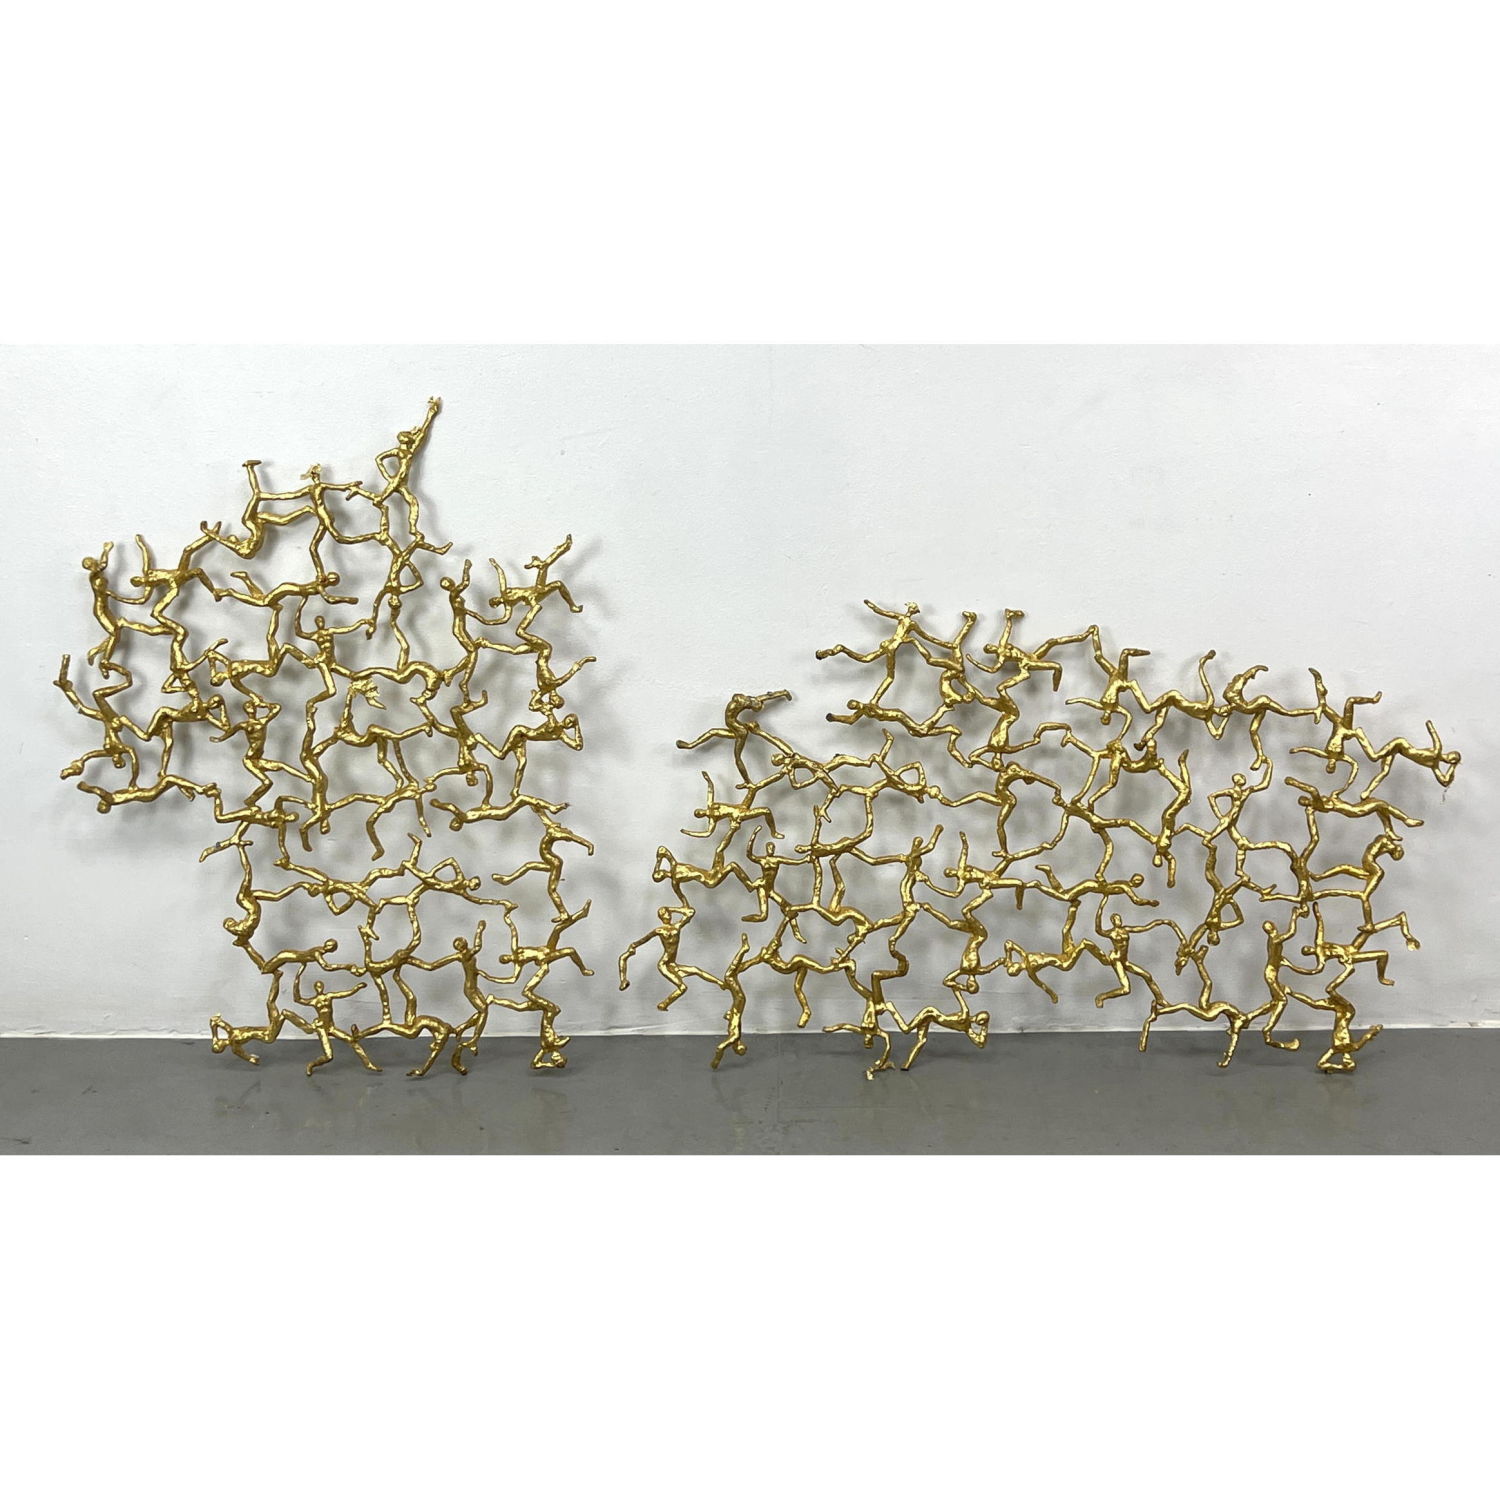 2pc Figural Gilt Metal Wall Sculptures.